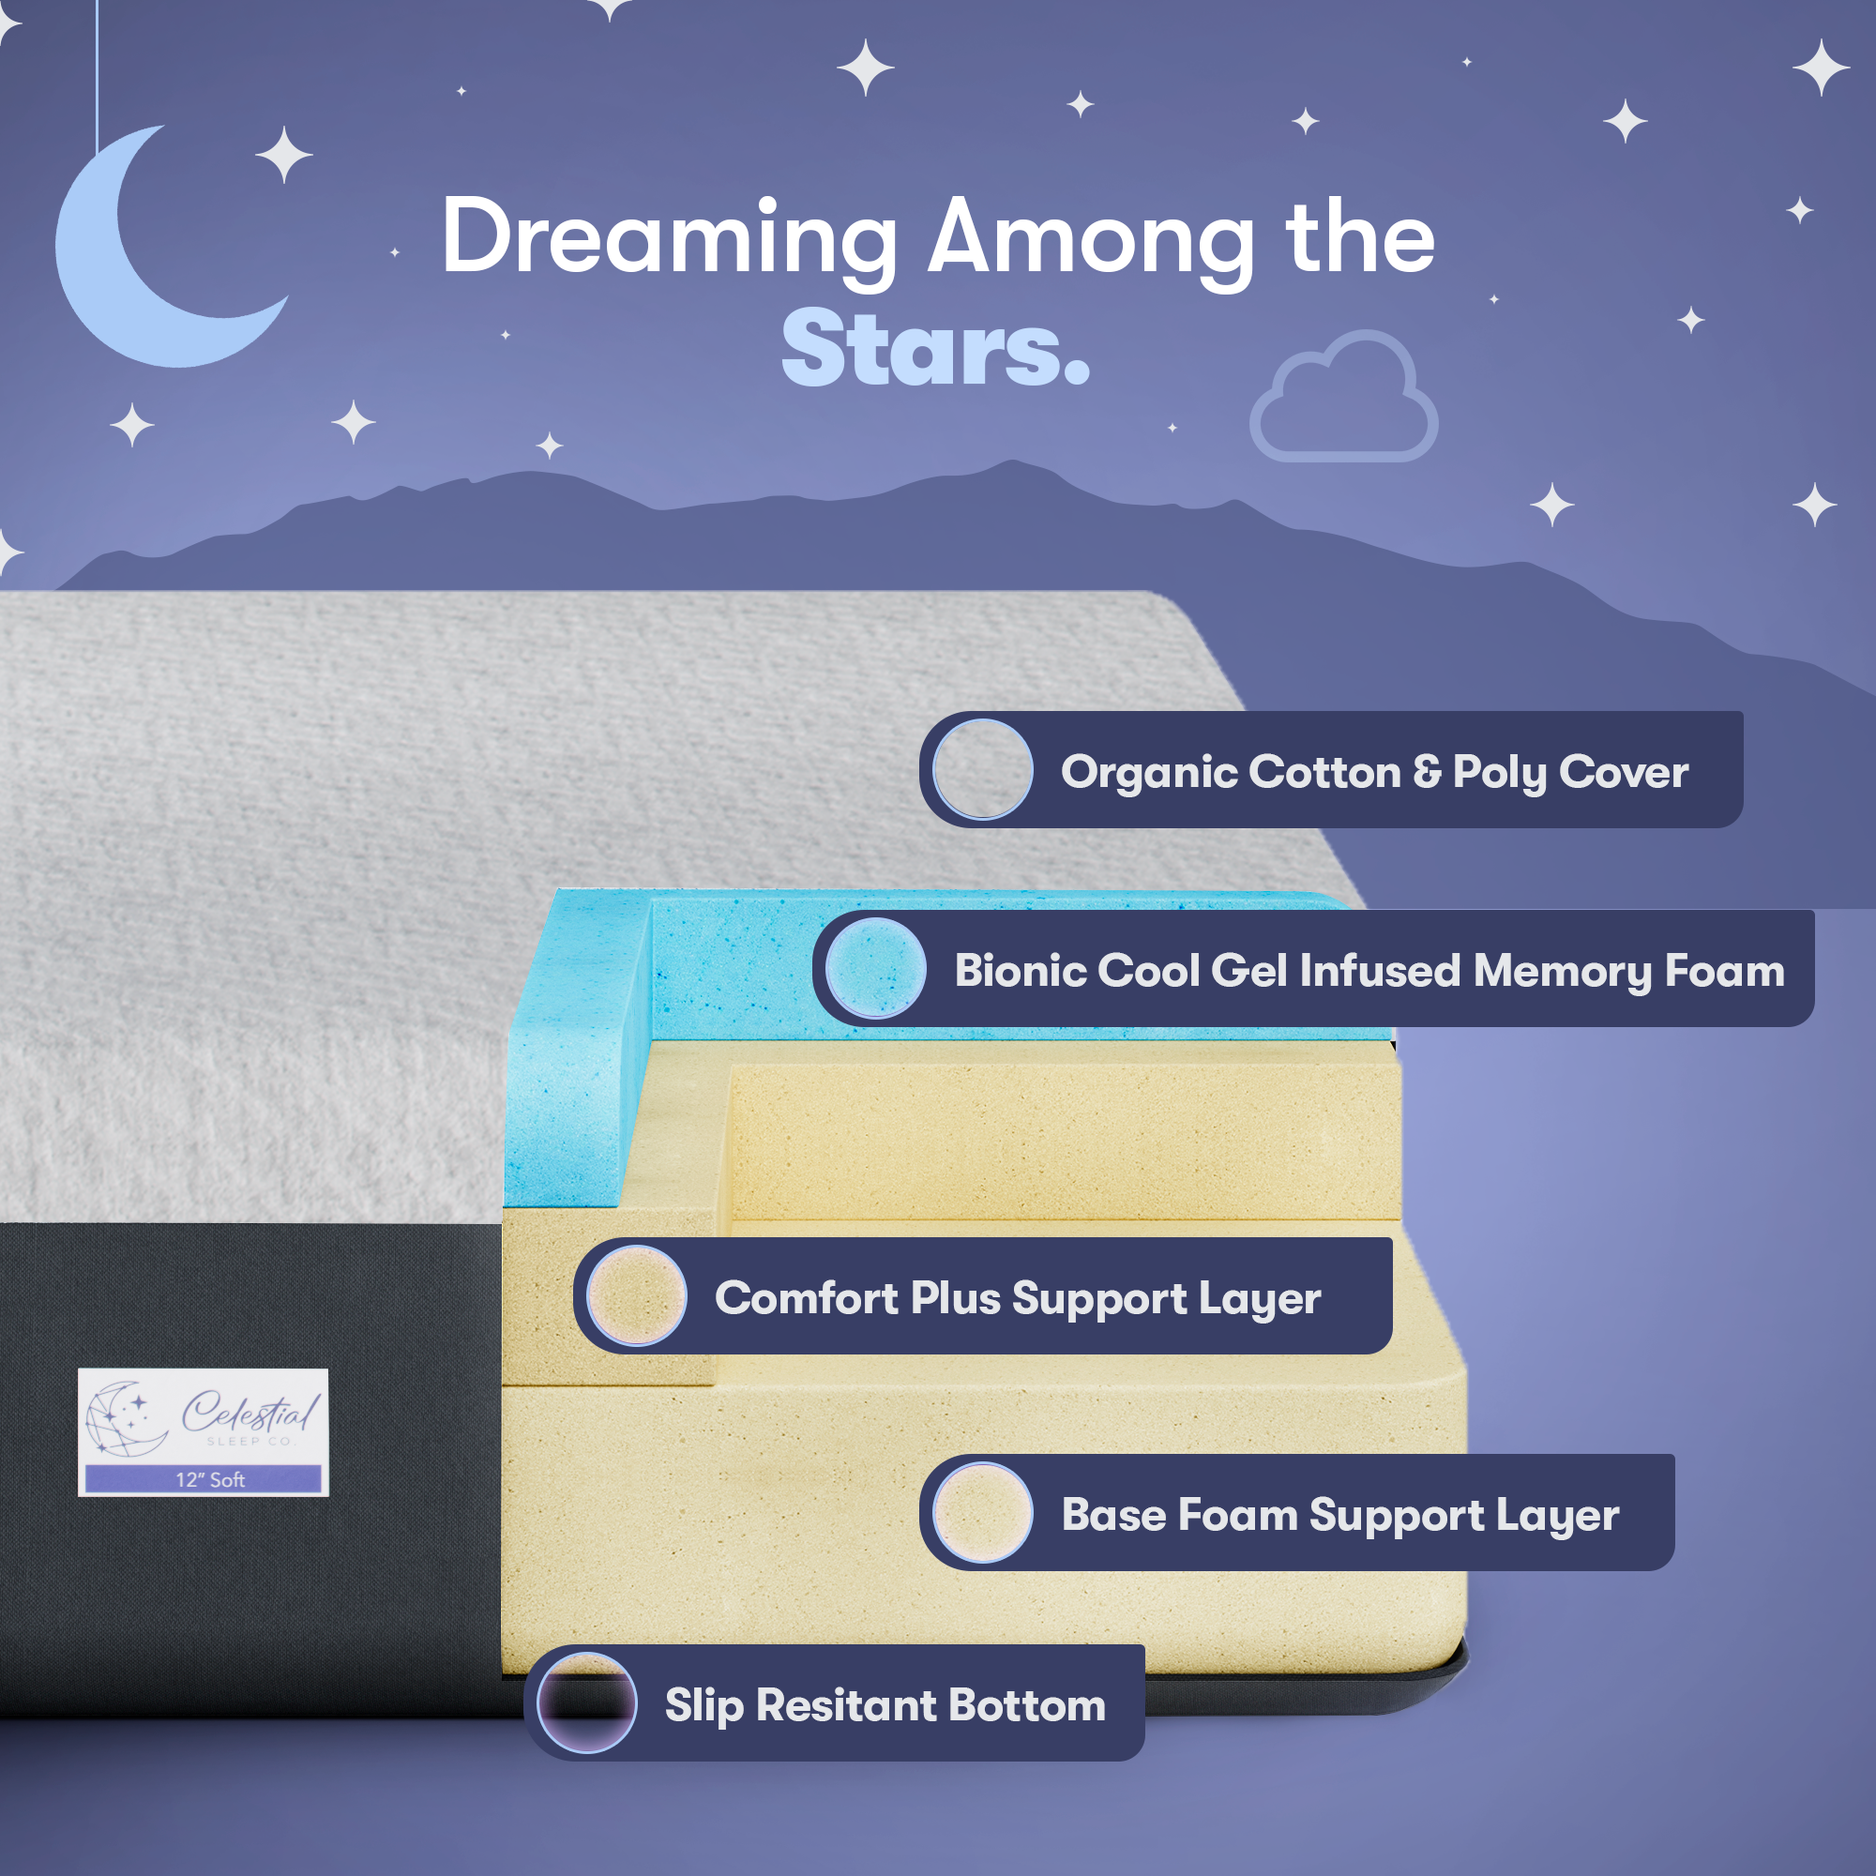 12 inch Medium Soft Signature Cooling Mattress Celestial Sleep®